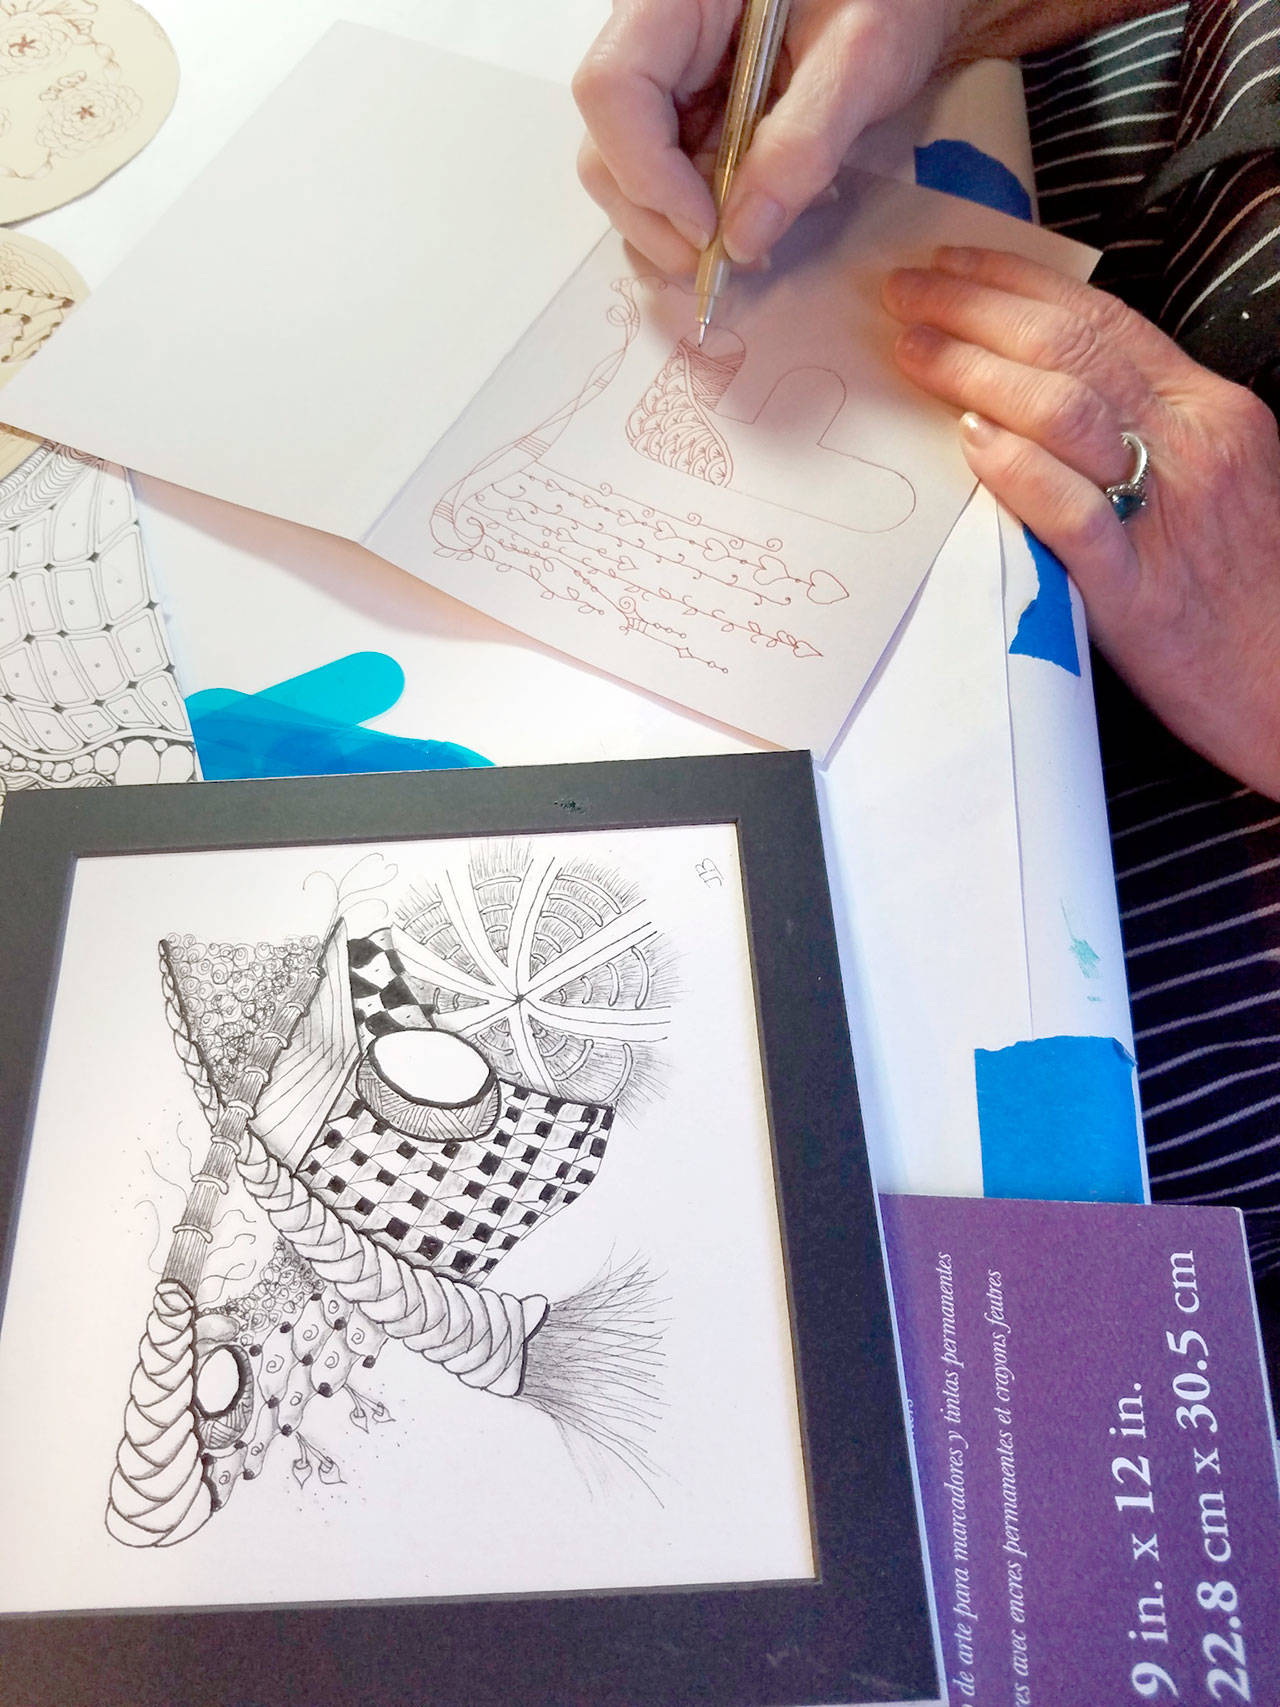 Janie Brackney will demonstrate Zentangle art at The Landing Artists Studio on Saturday.